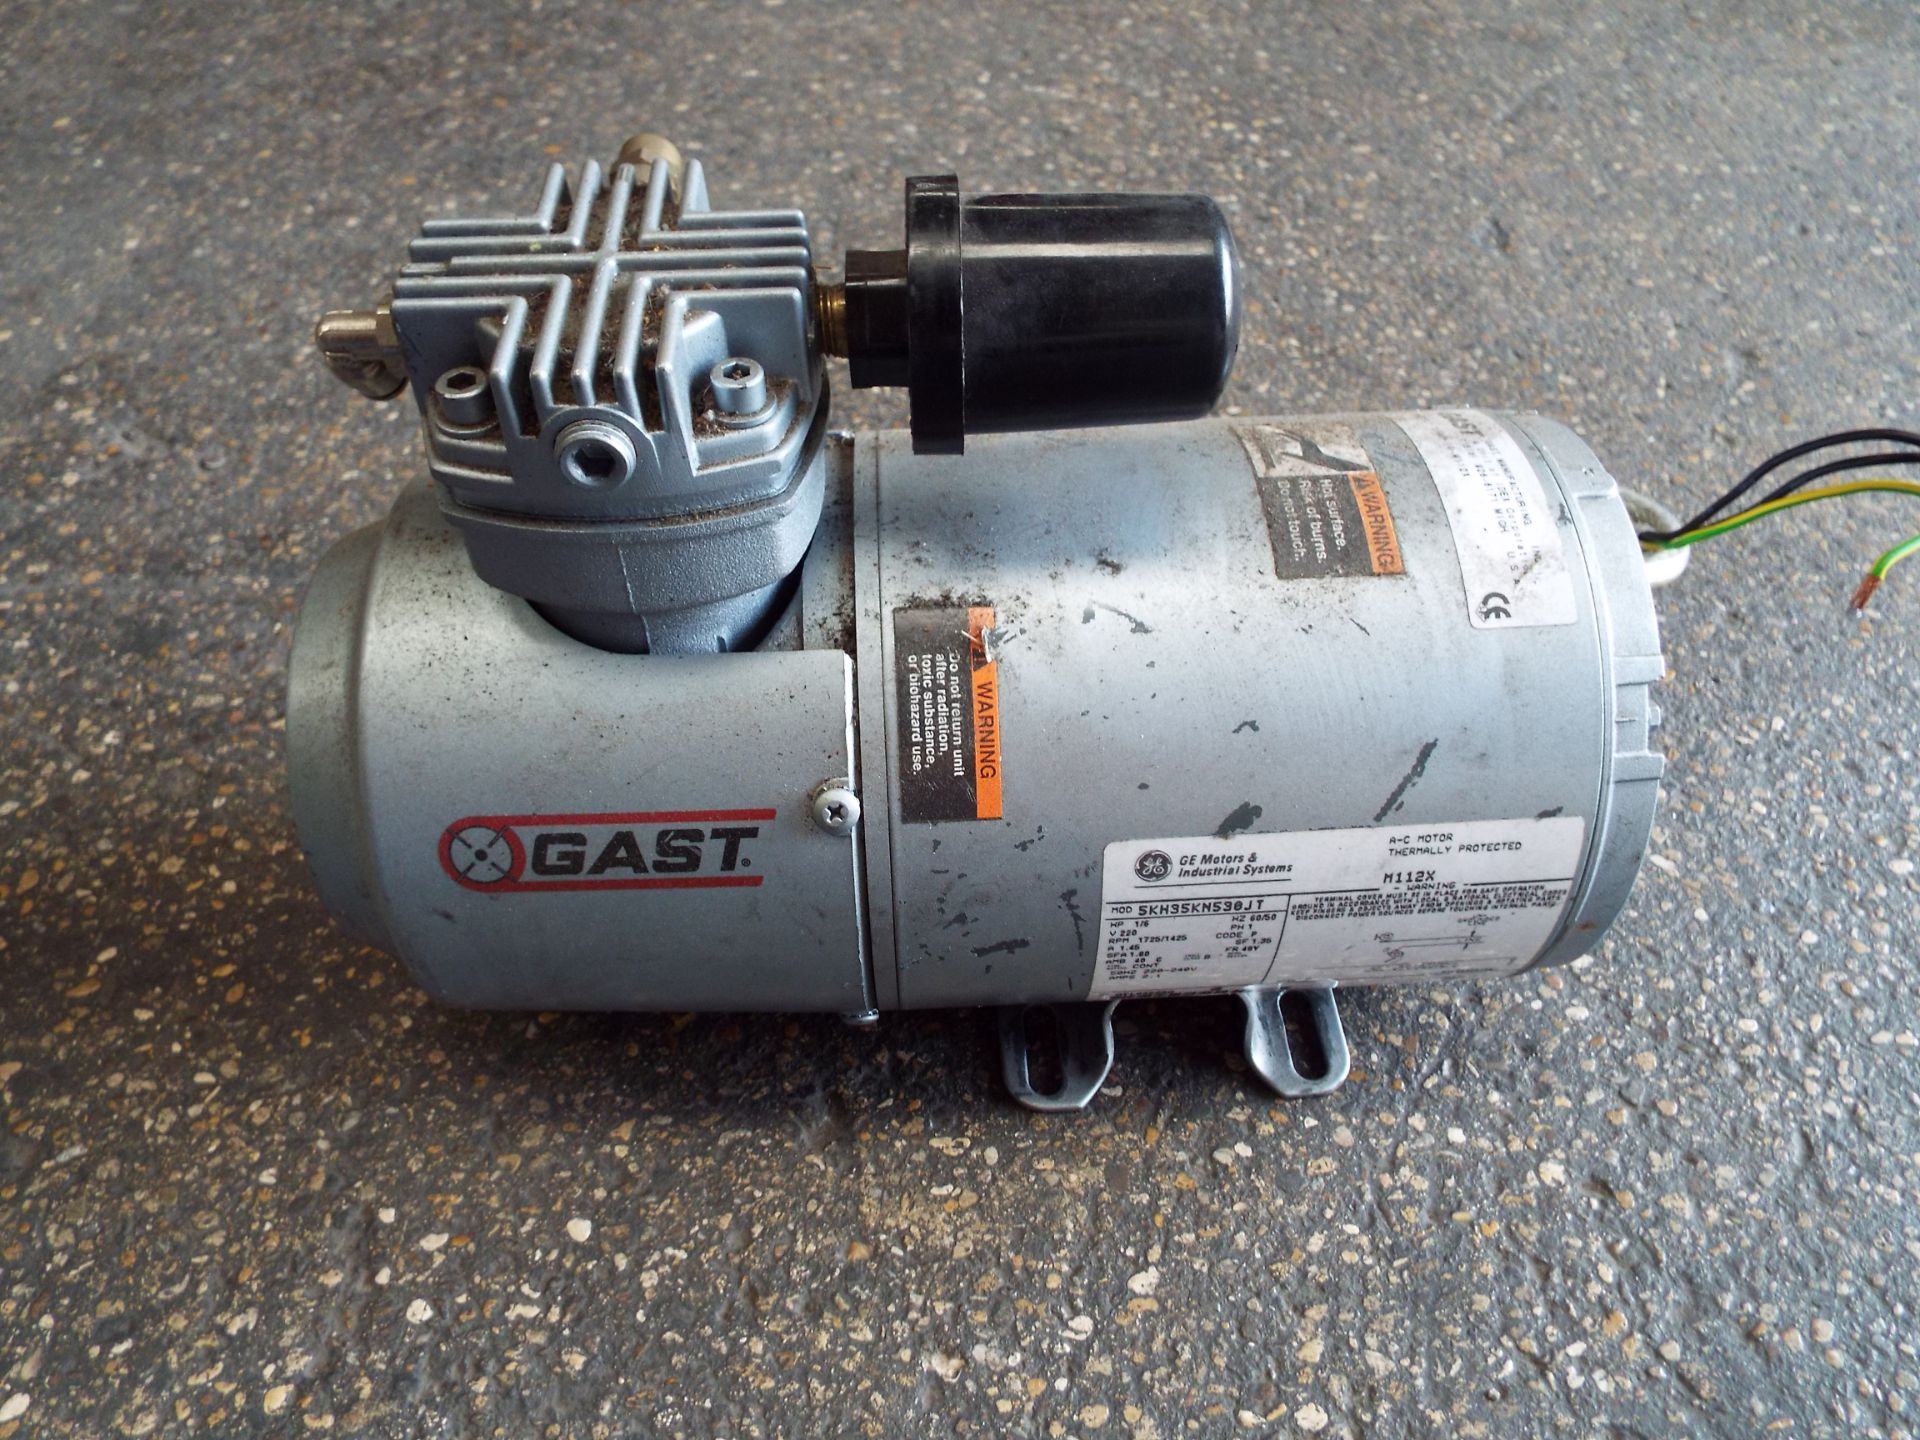 Gast 1H Oil-Less Compressor/Vaccuum Pump - Image 2 of 8